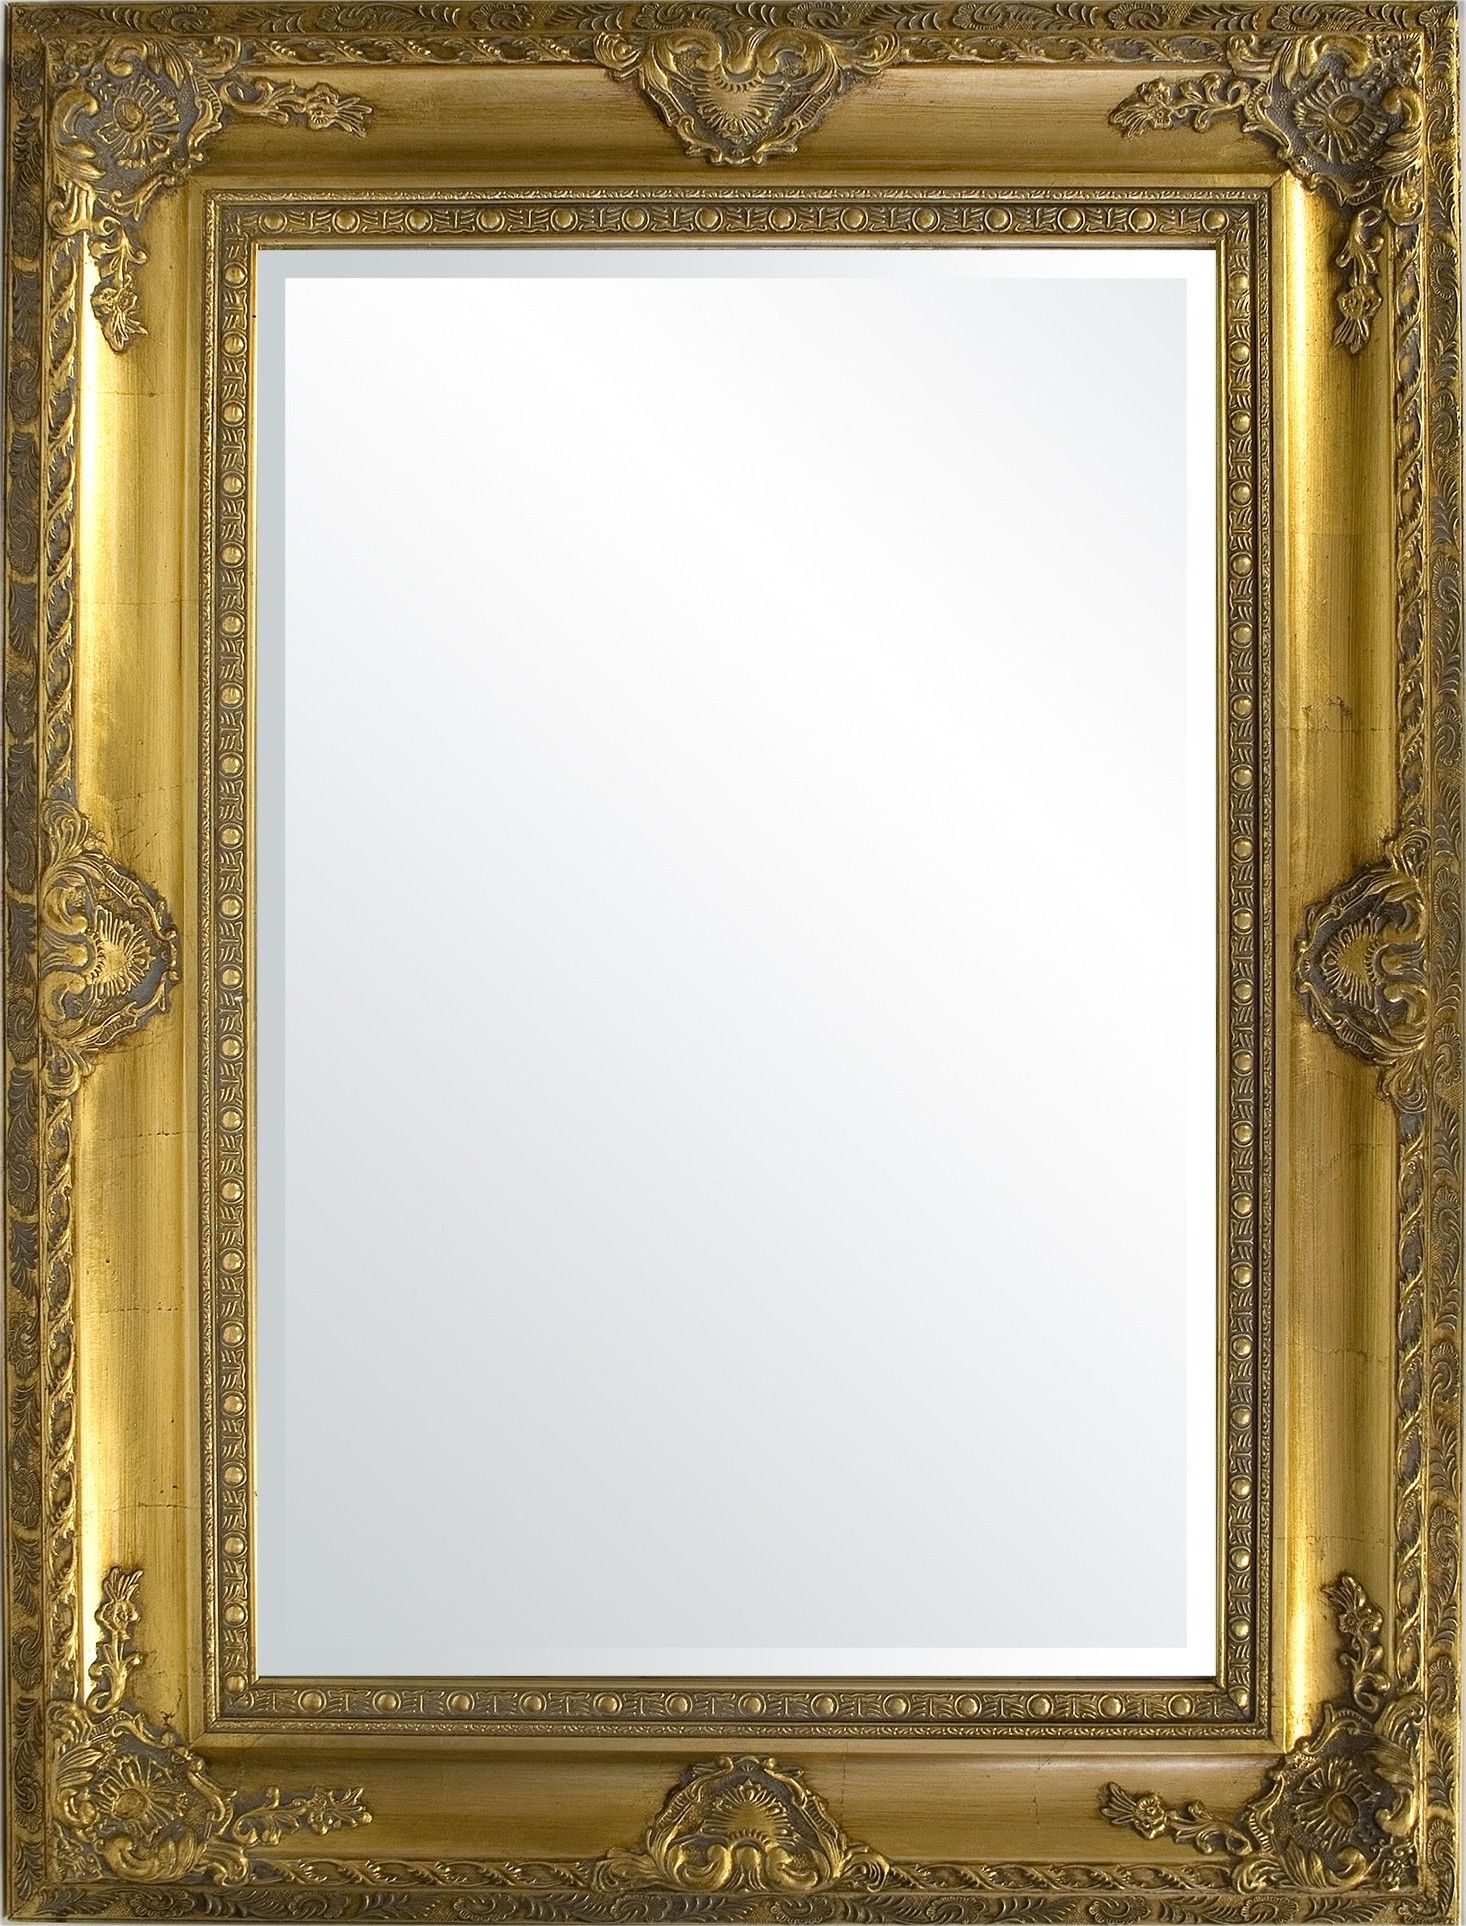 Zlaté zrcadlo s výrazným zdobením 120 cm 47581 Mdum - M DUM.cz